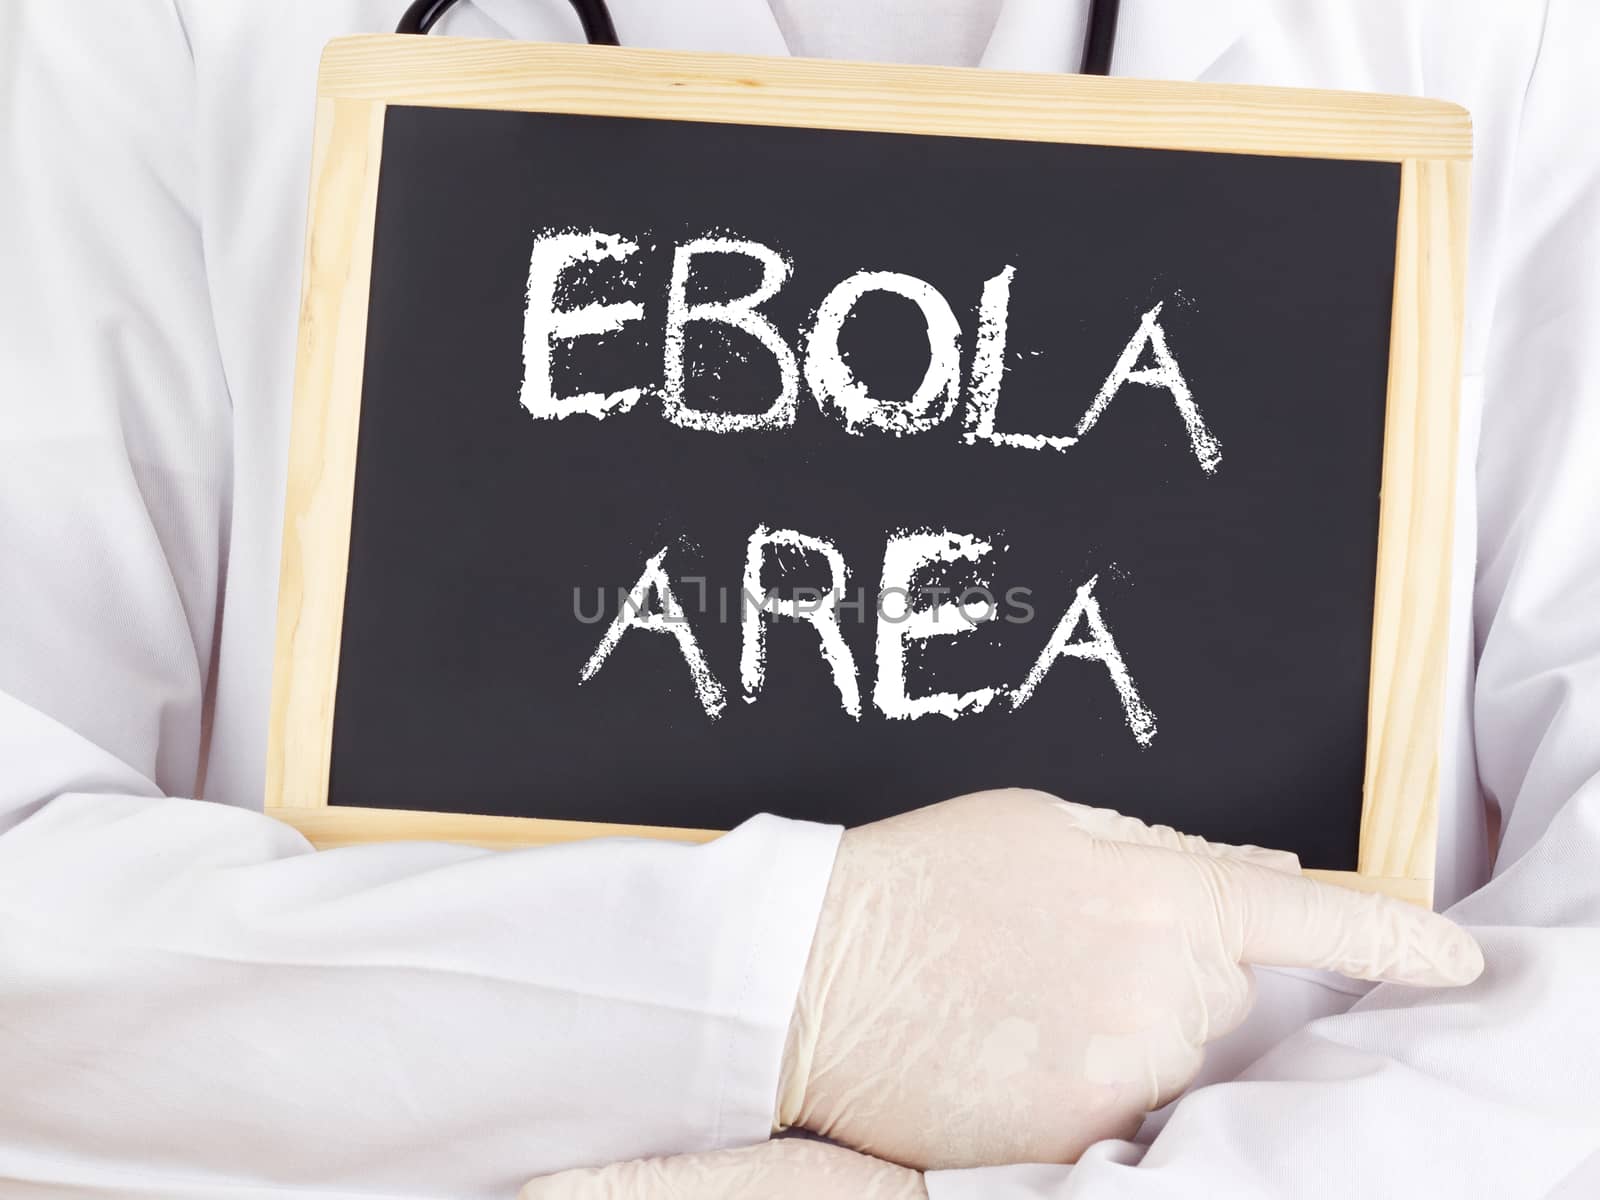 Doctor shows information: Ebola area